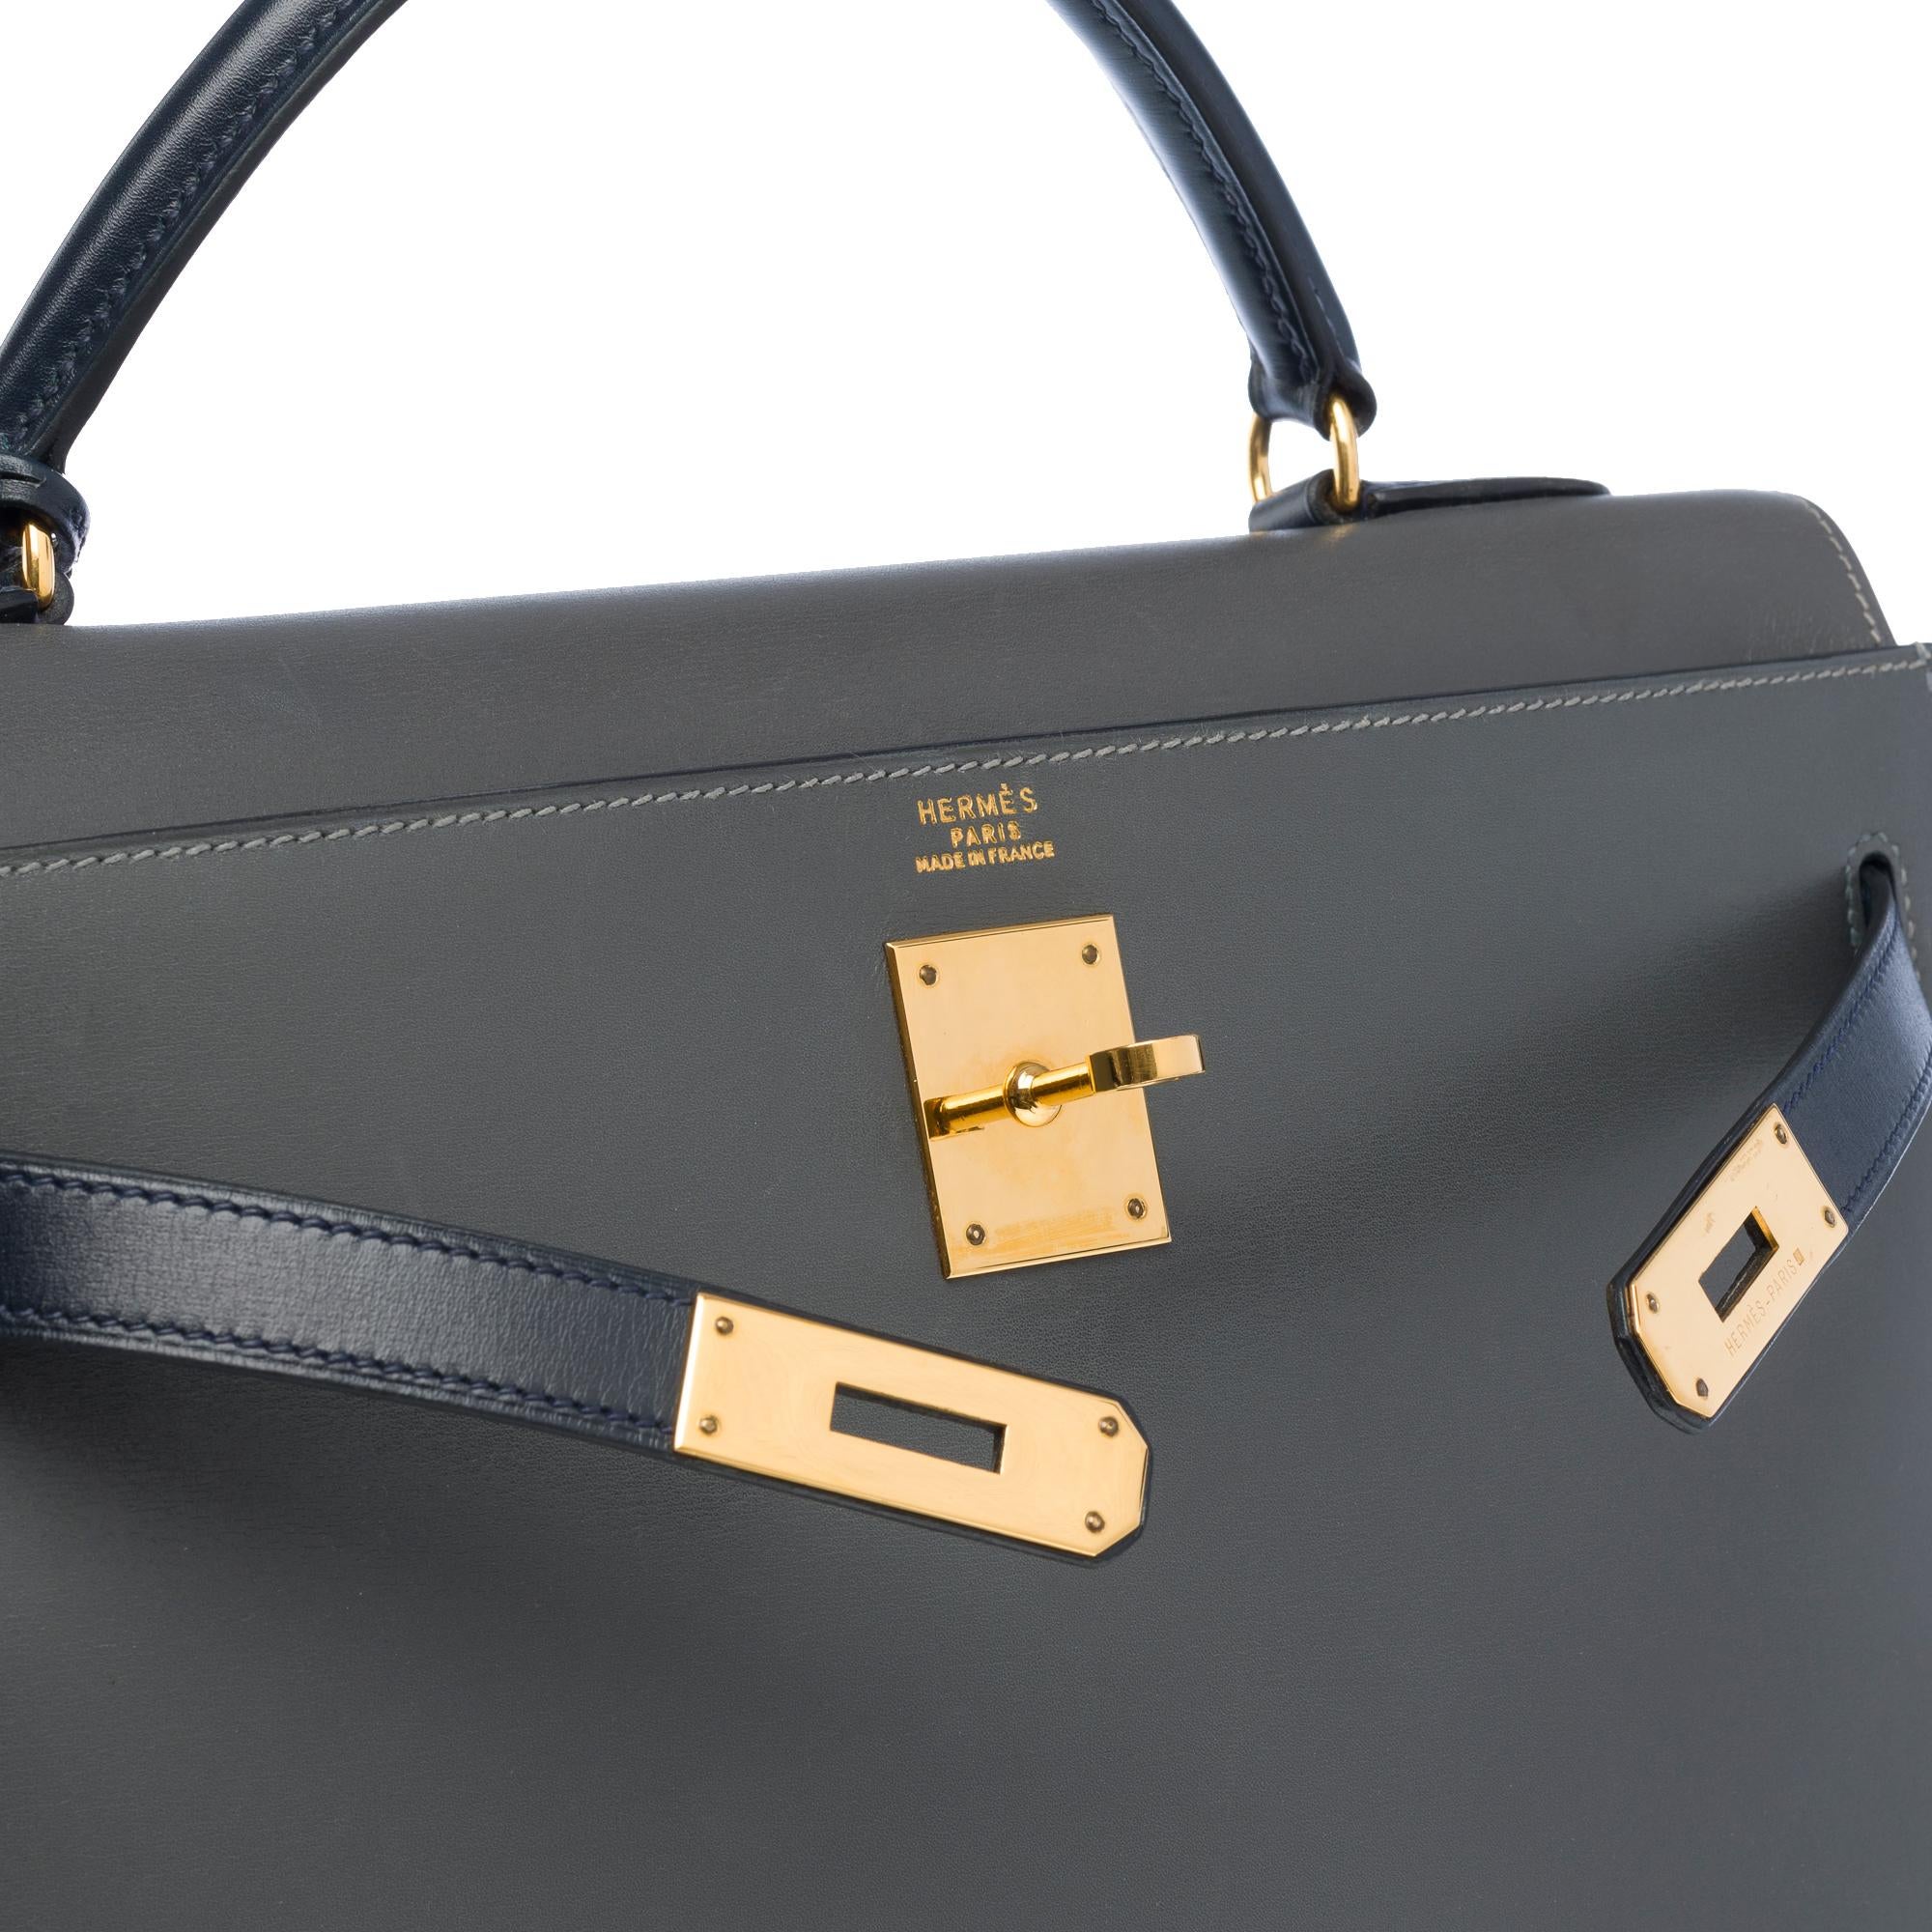 Rare Hermès Kelly 32 sellier handbag strap in Navy & Black calfskin leather, GHW 2